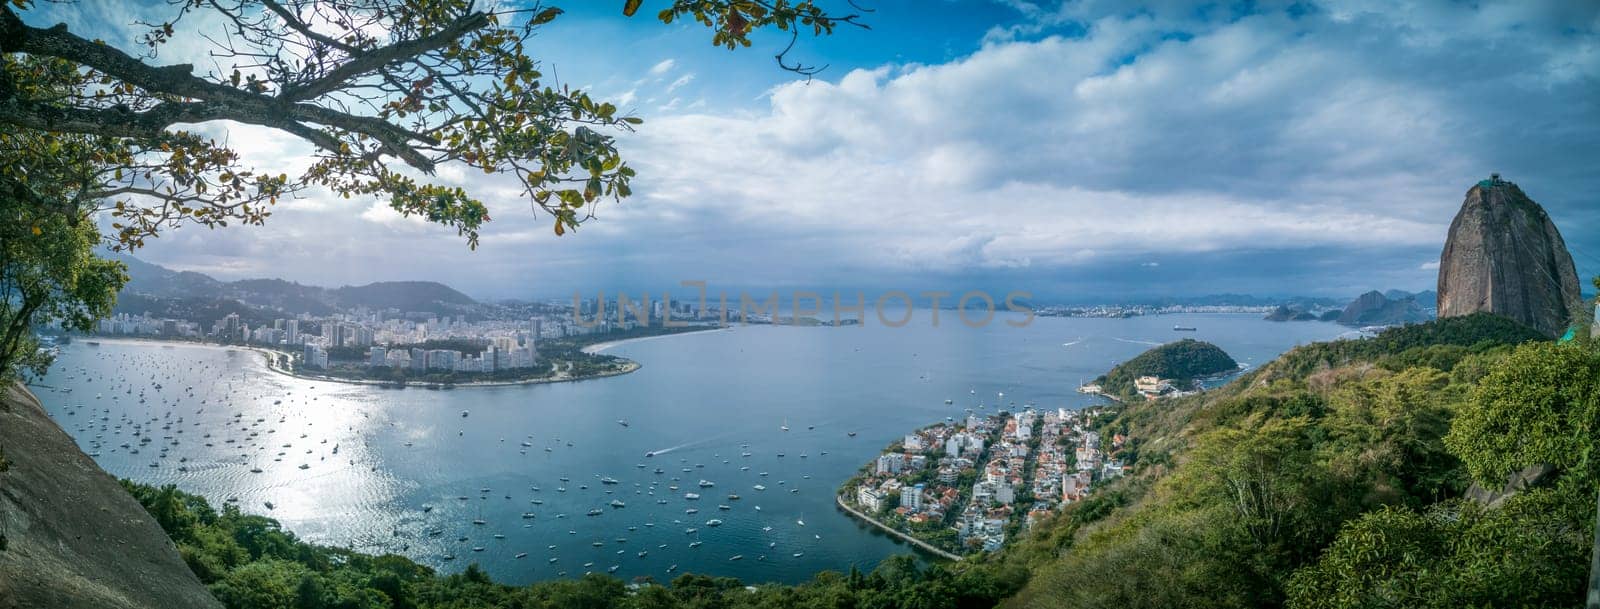 Aerial Panorama of Sugarloaf Mountain and Botafogo Bay, Rio by FerradalFCG